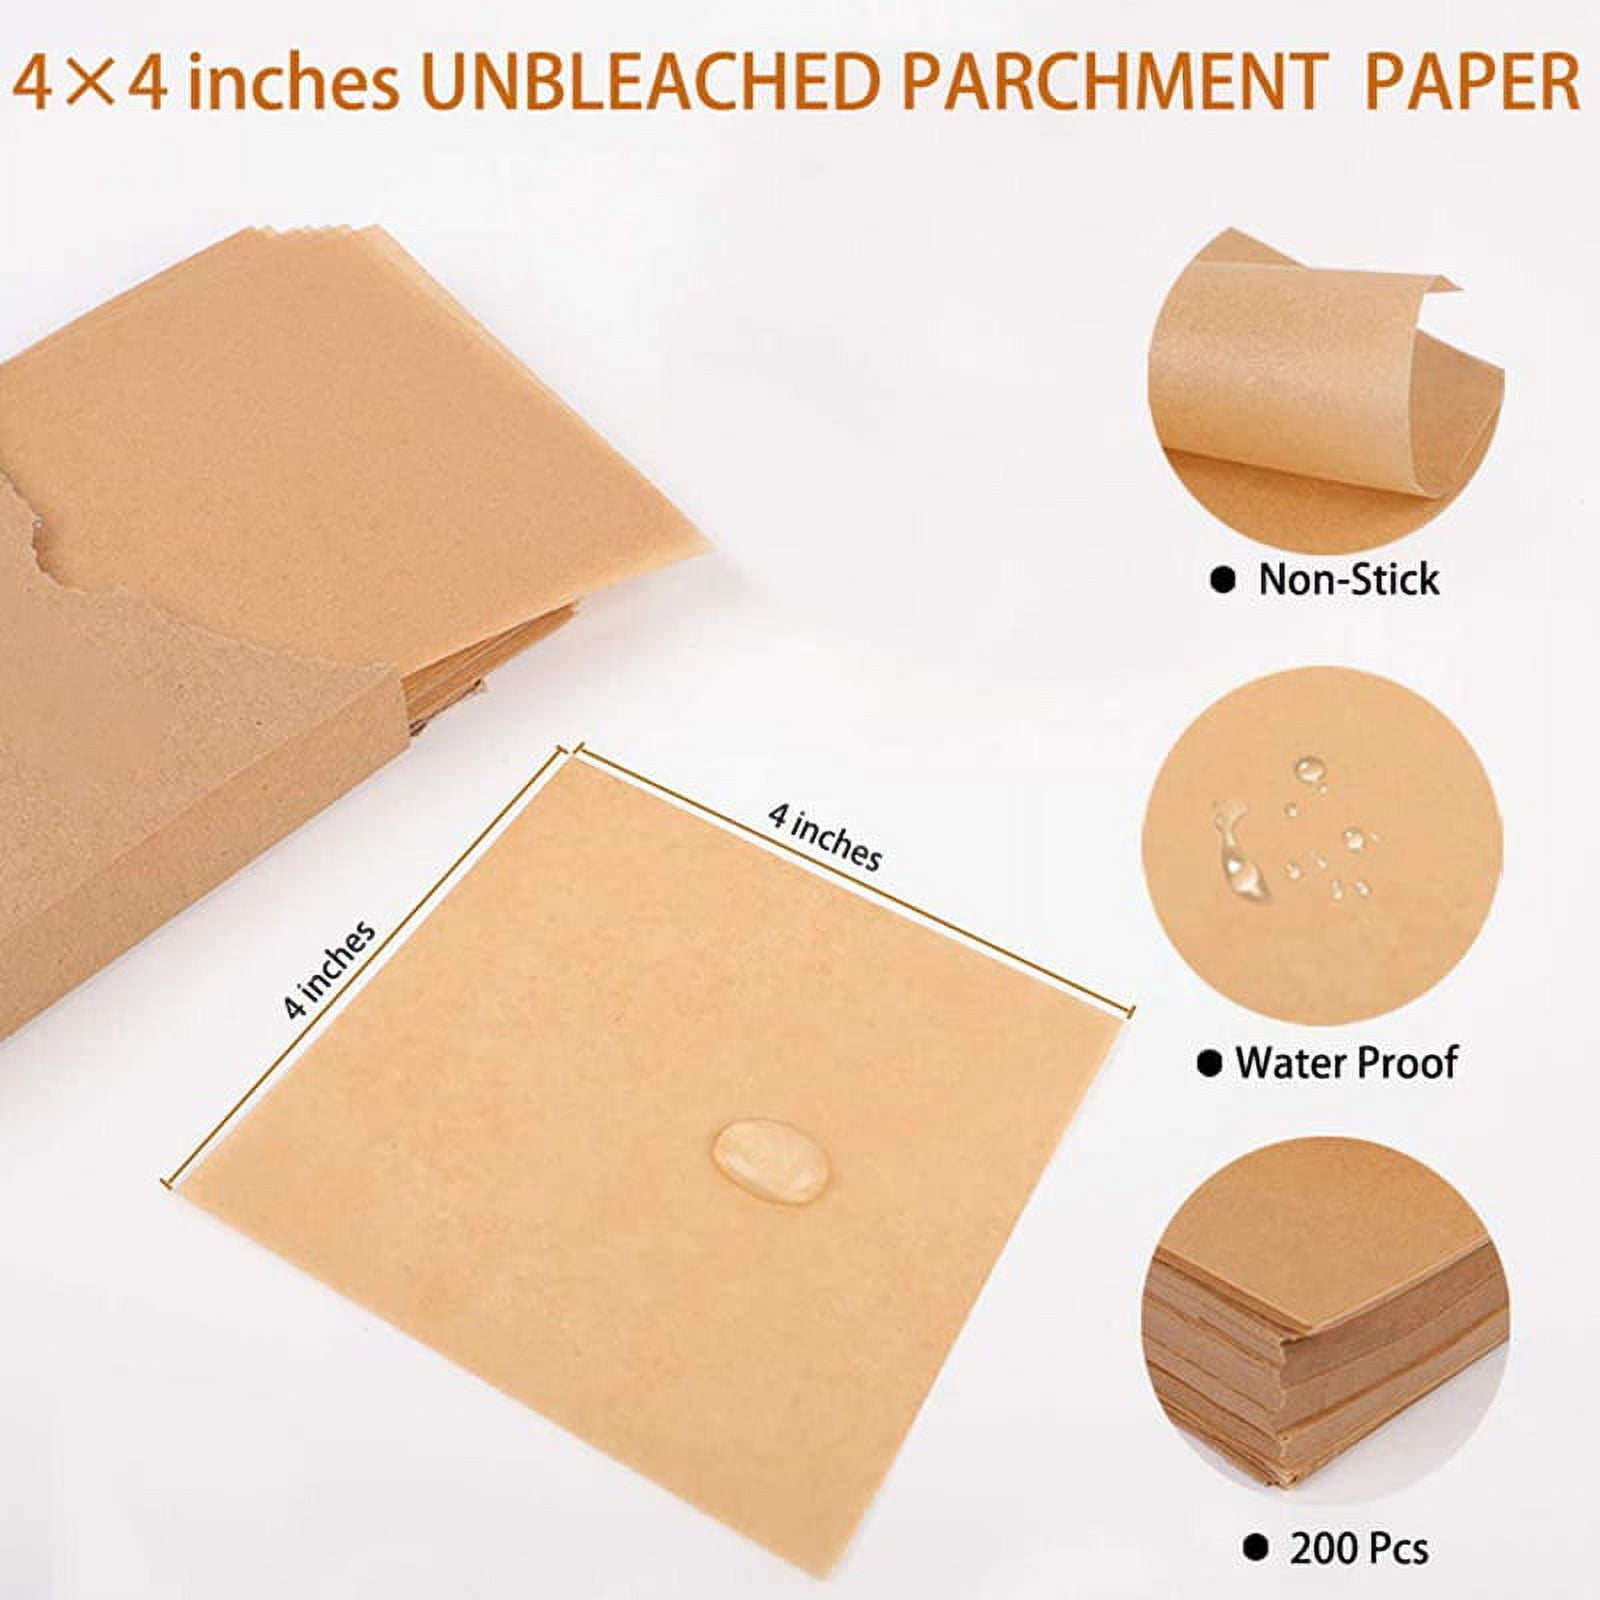 Generic SMARTAKE 400PCS Parchment Paper Sheets, 9 x 13 IN Pre-Cut